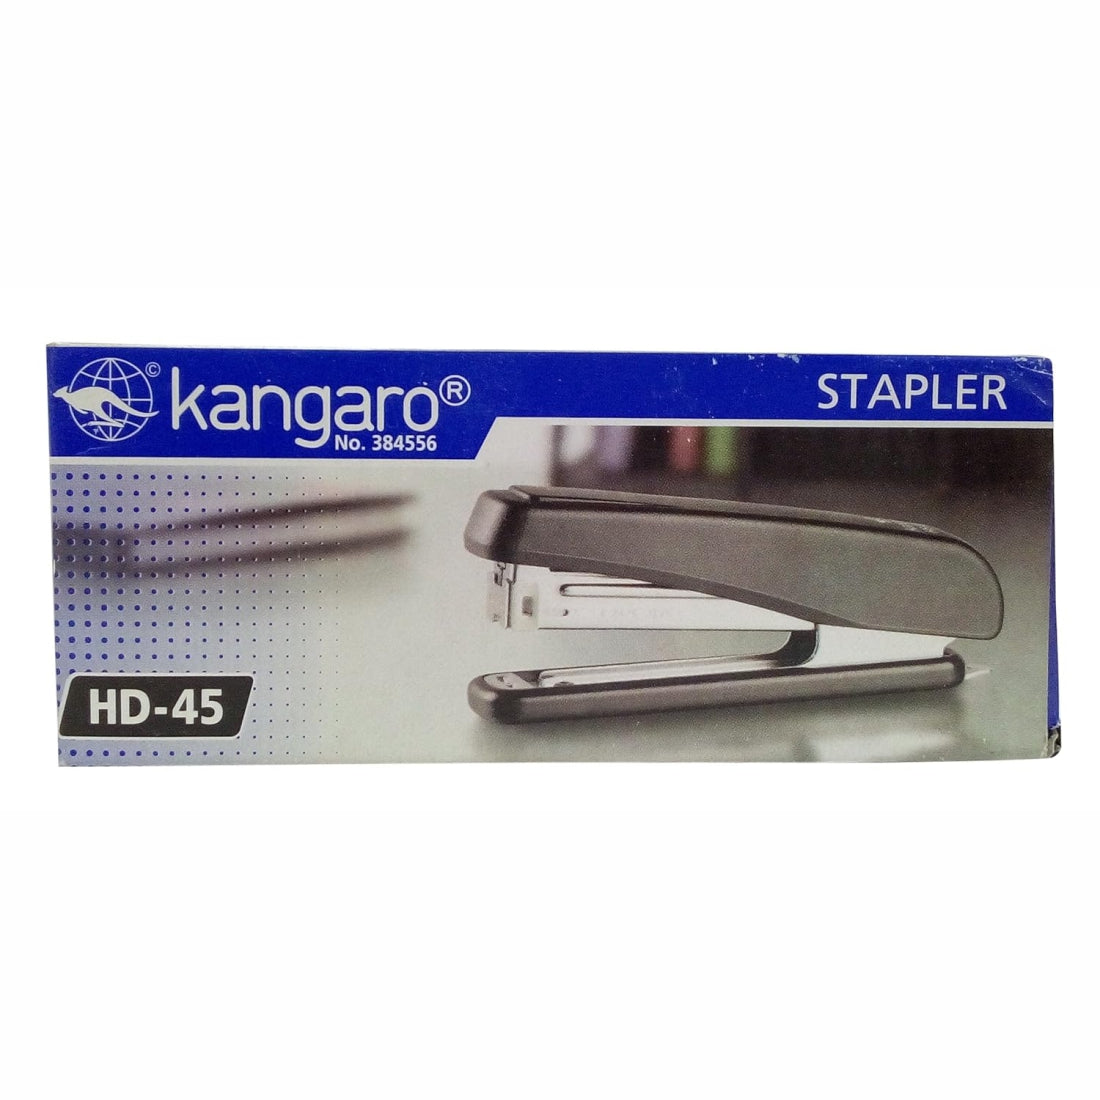 Kangaro HD-45 Quick Loading Stapler